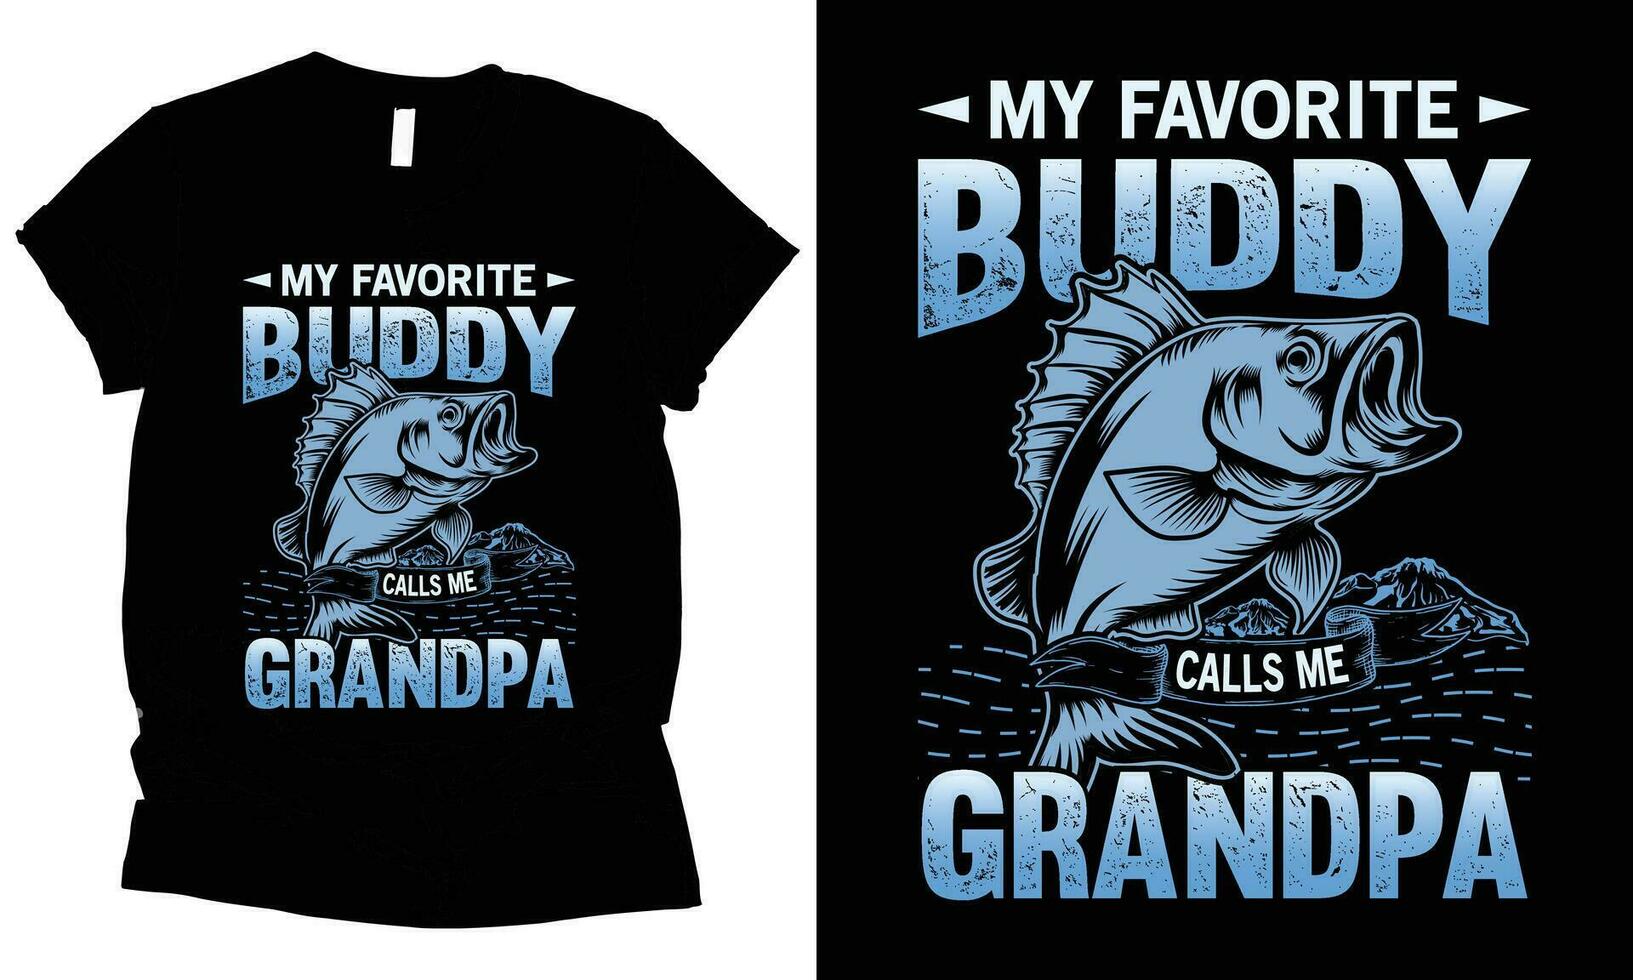 My favorite buddy calls me grandpa fishing t-shirt design